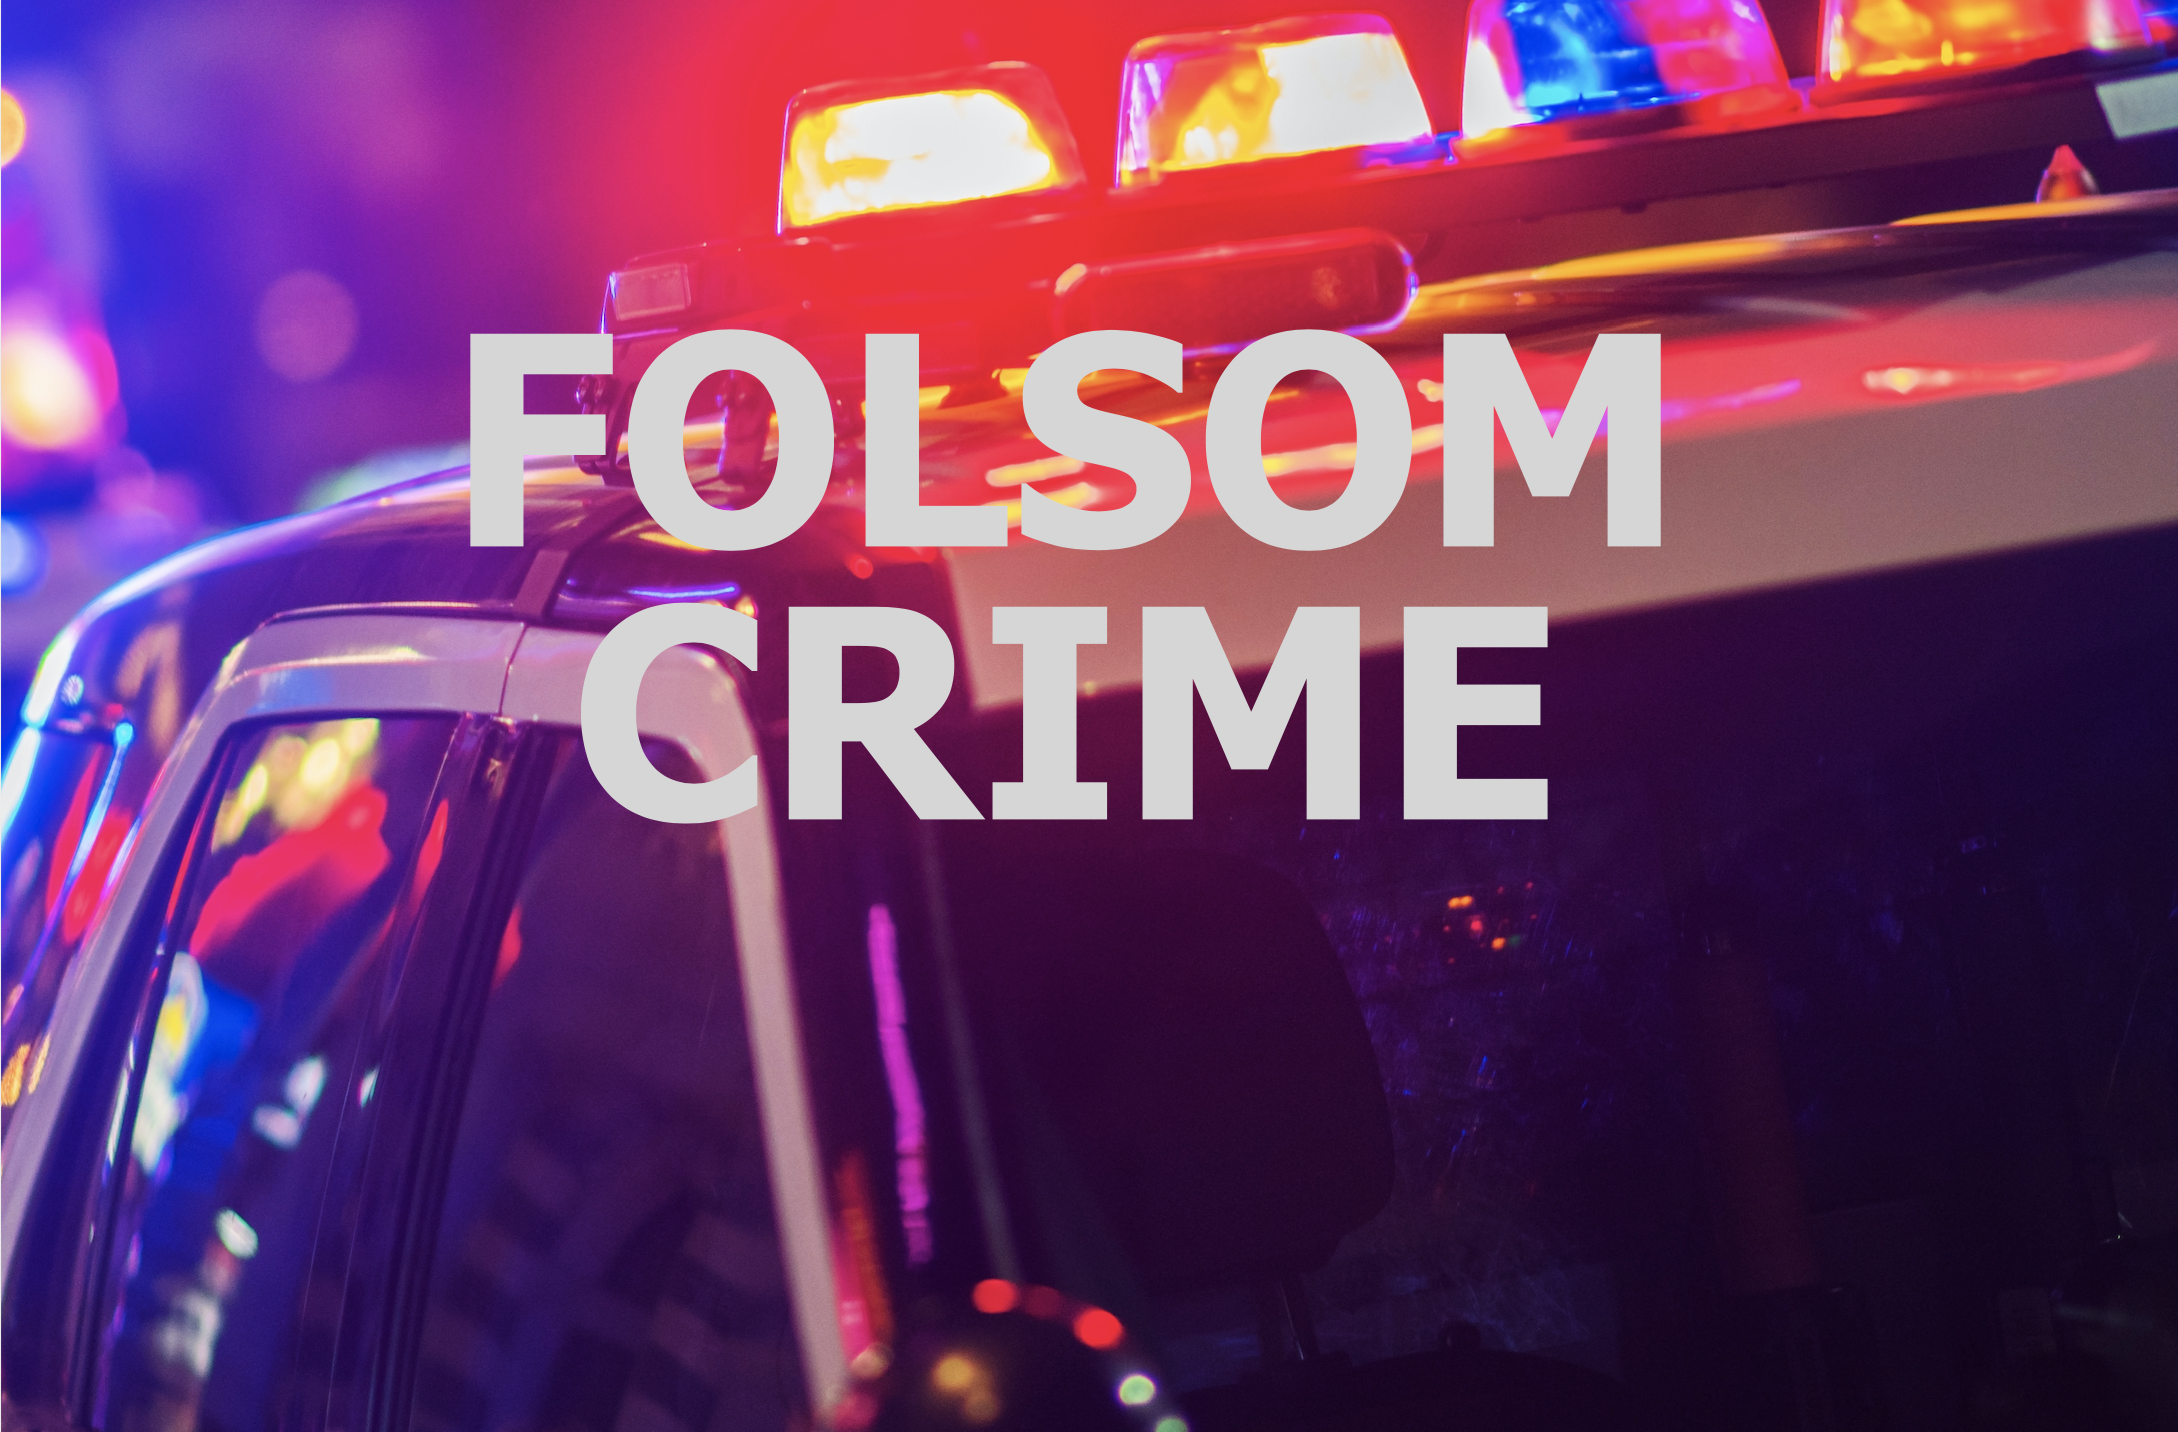 Assault, indecent exposure top Folsom crimes